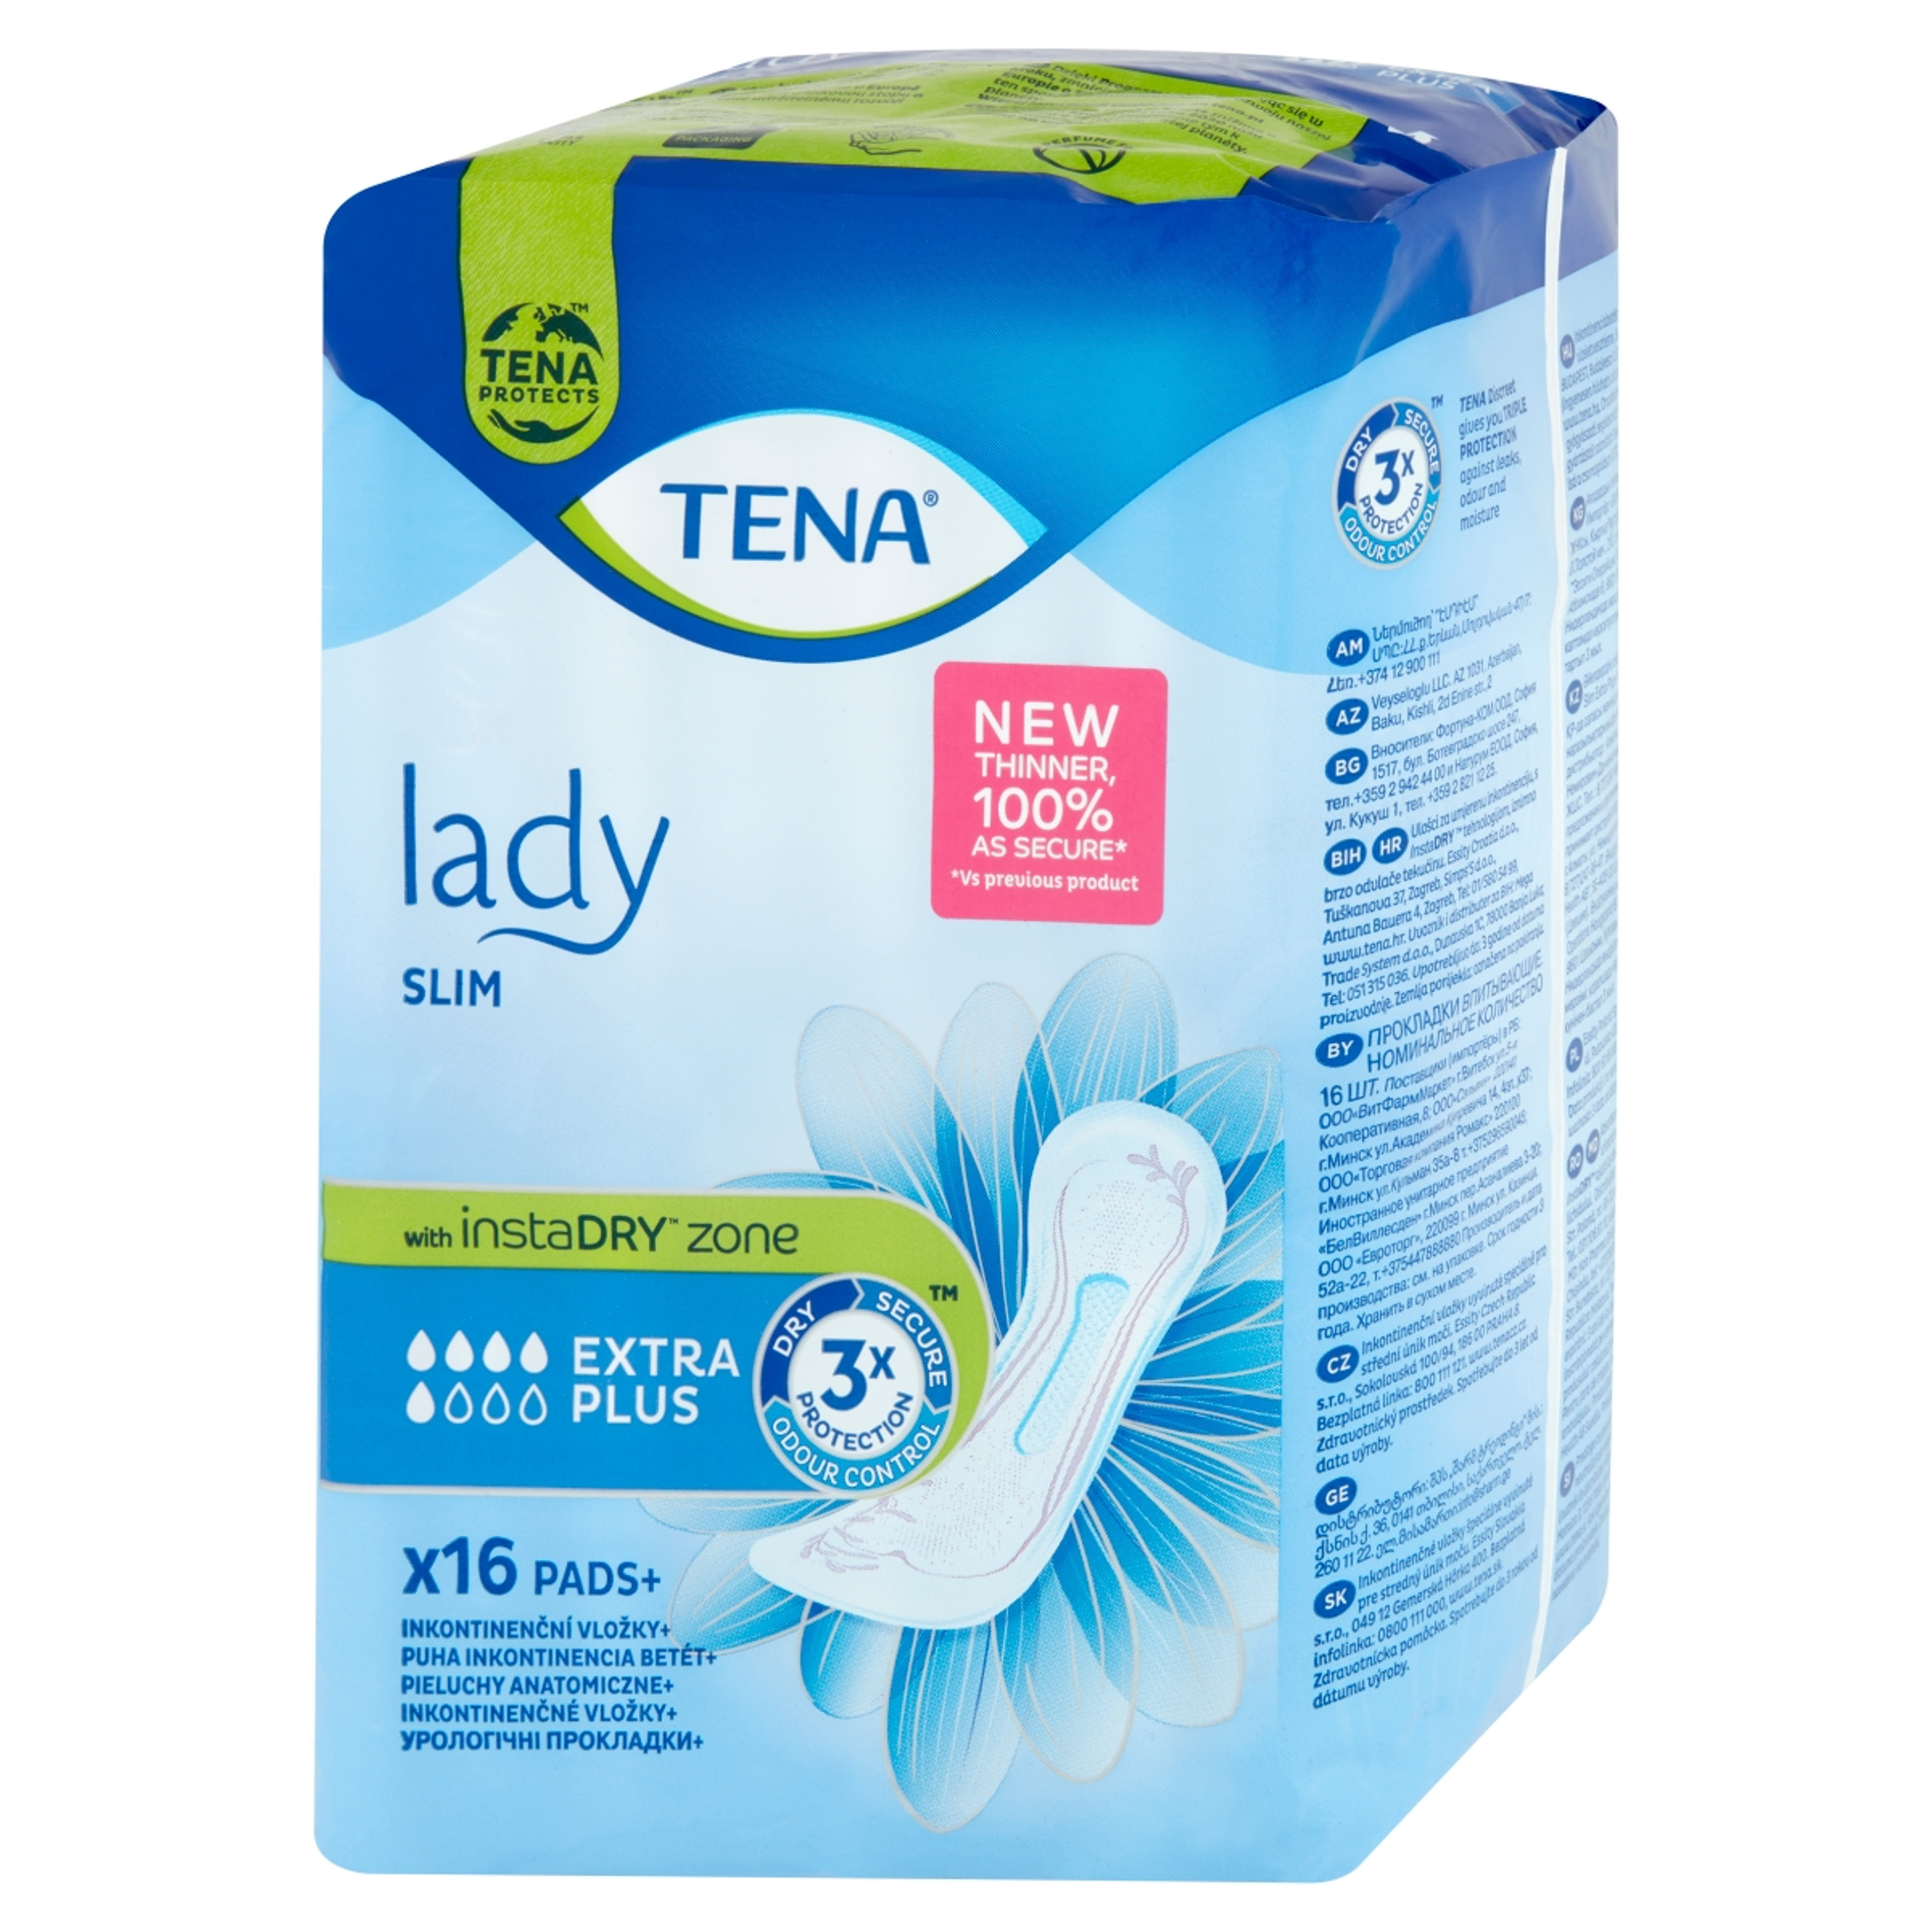 Tena Lady inkontinencia betét extra plus - 16 db-4